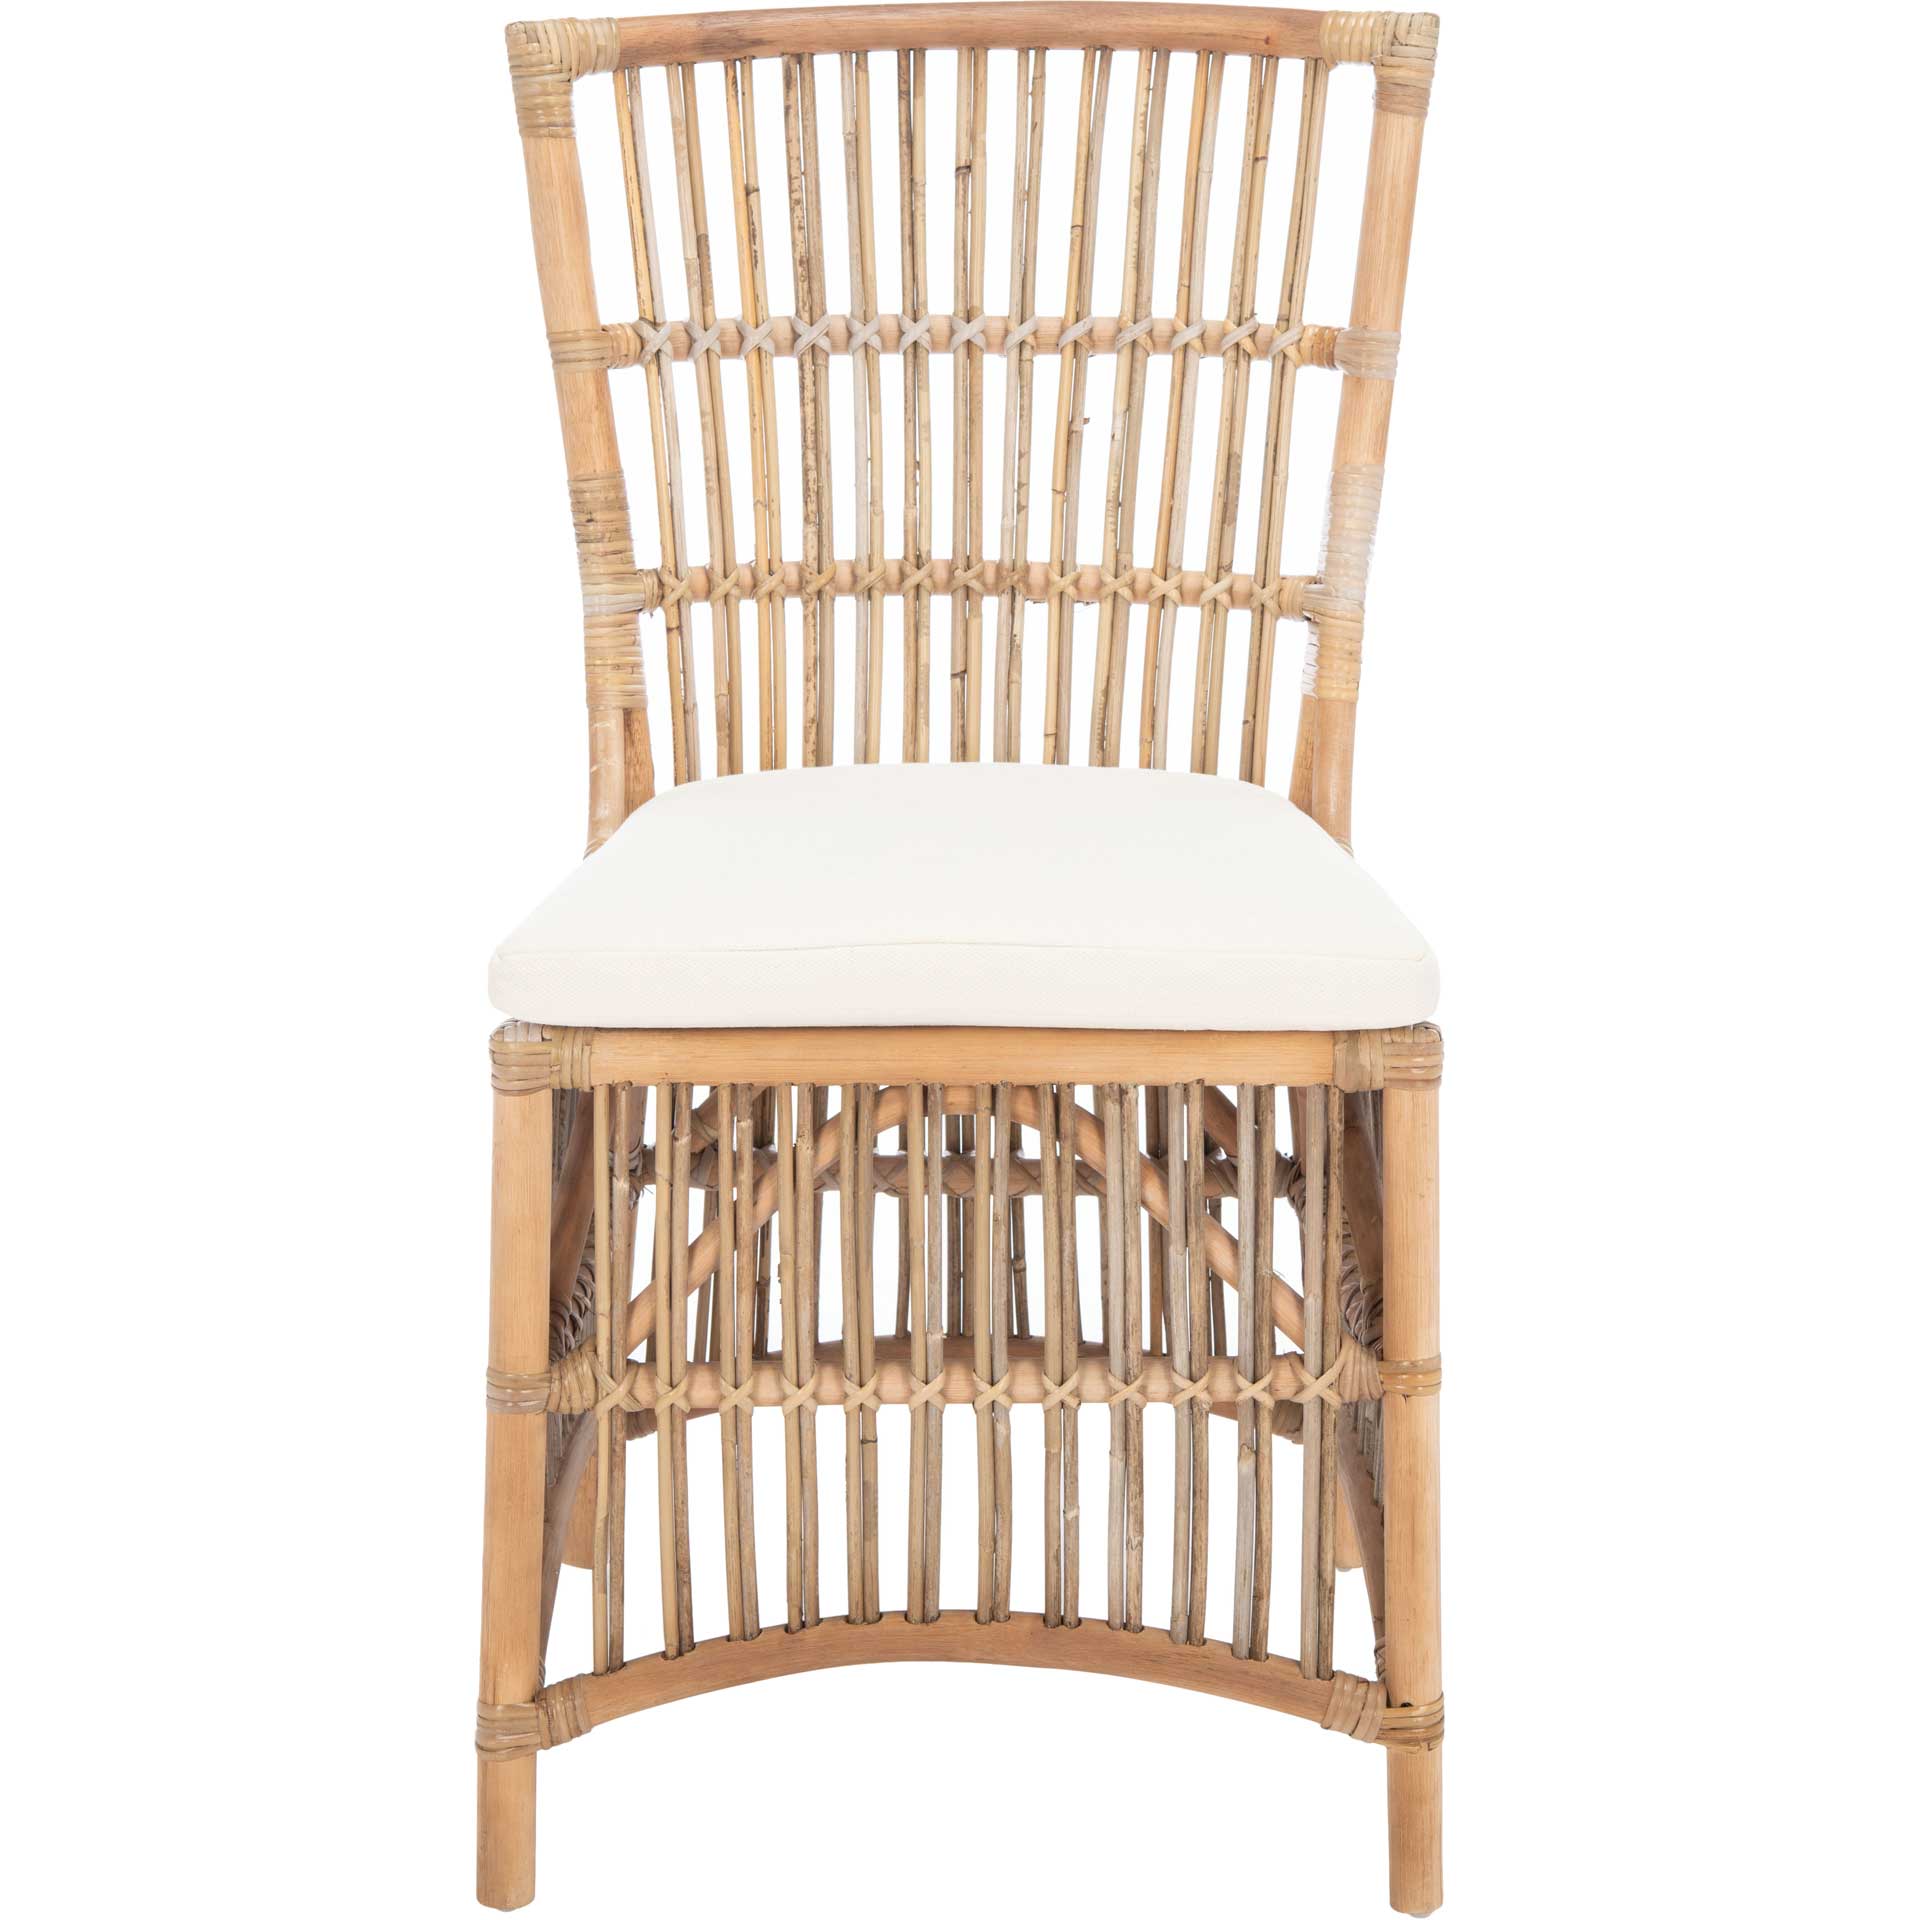 Erapel Rattan Accent Chair Gray White Wash (Set of 2)